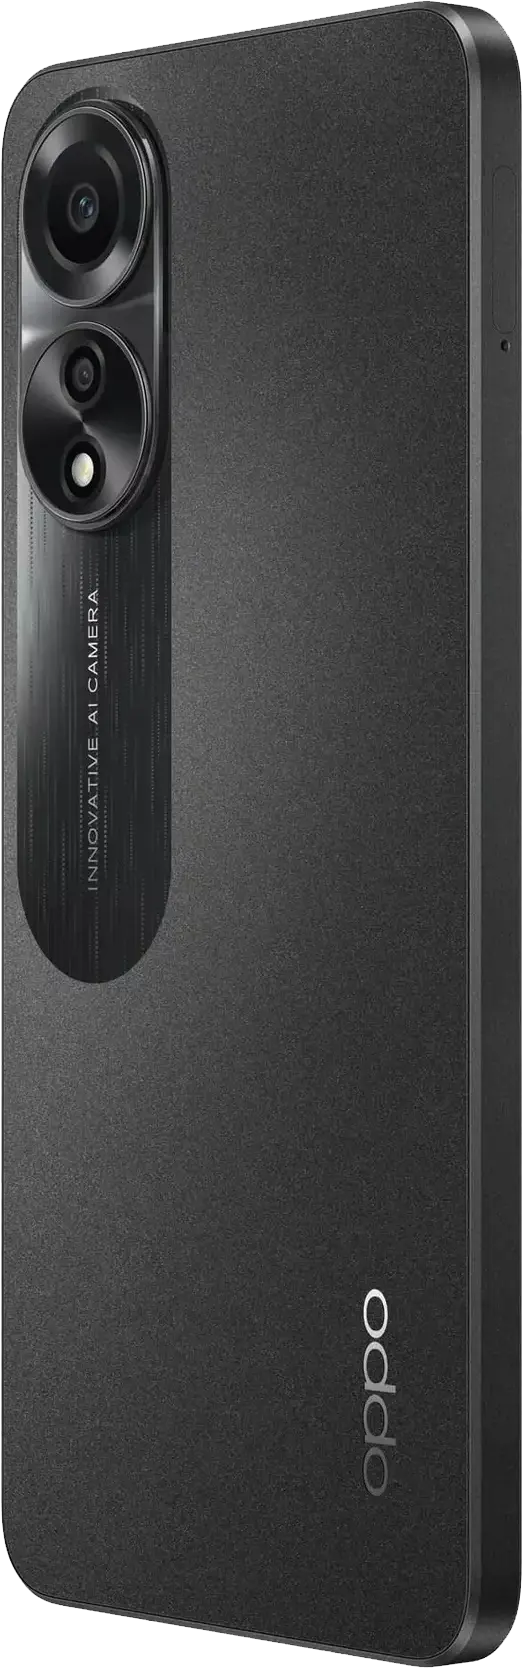 Oppo A78 Dual Sim Mobile,  256 GB Memory, 8GB RAM, 4G LTE, Mist Black